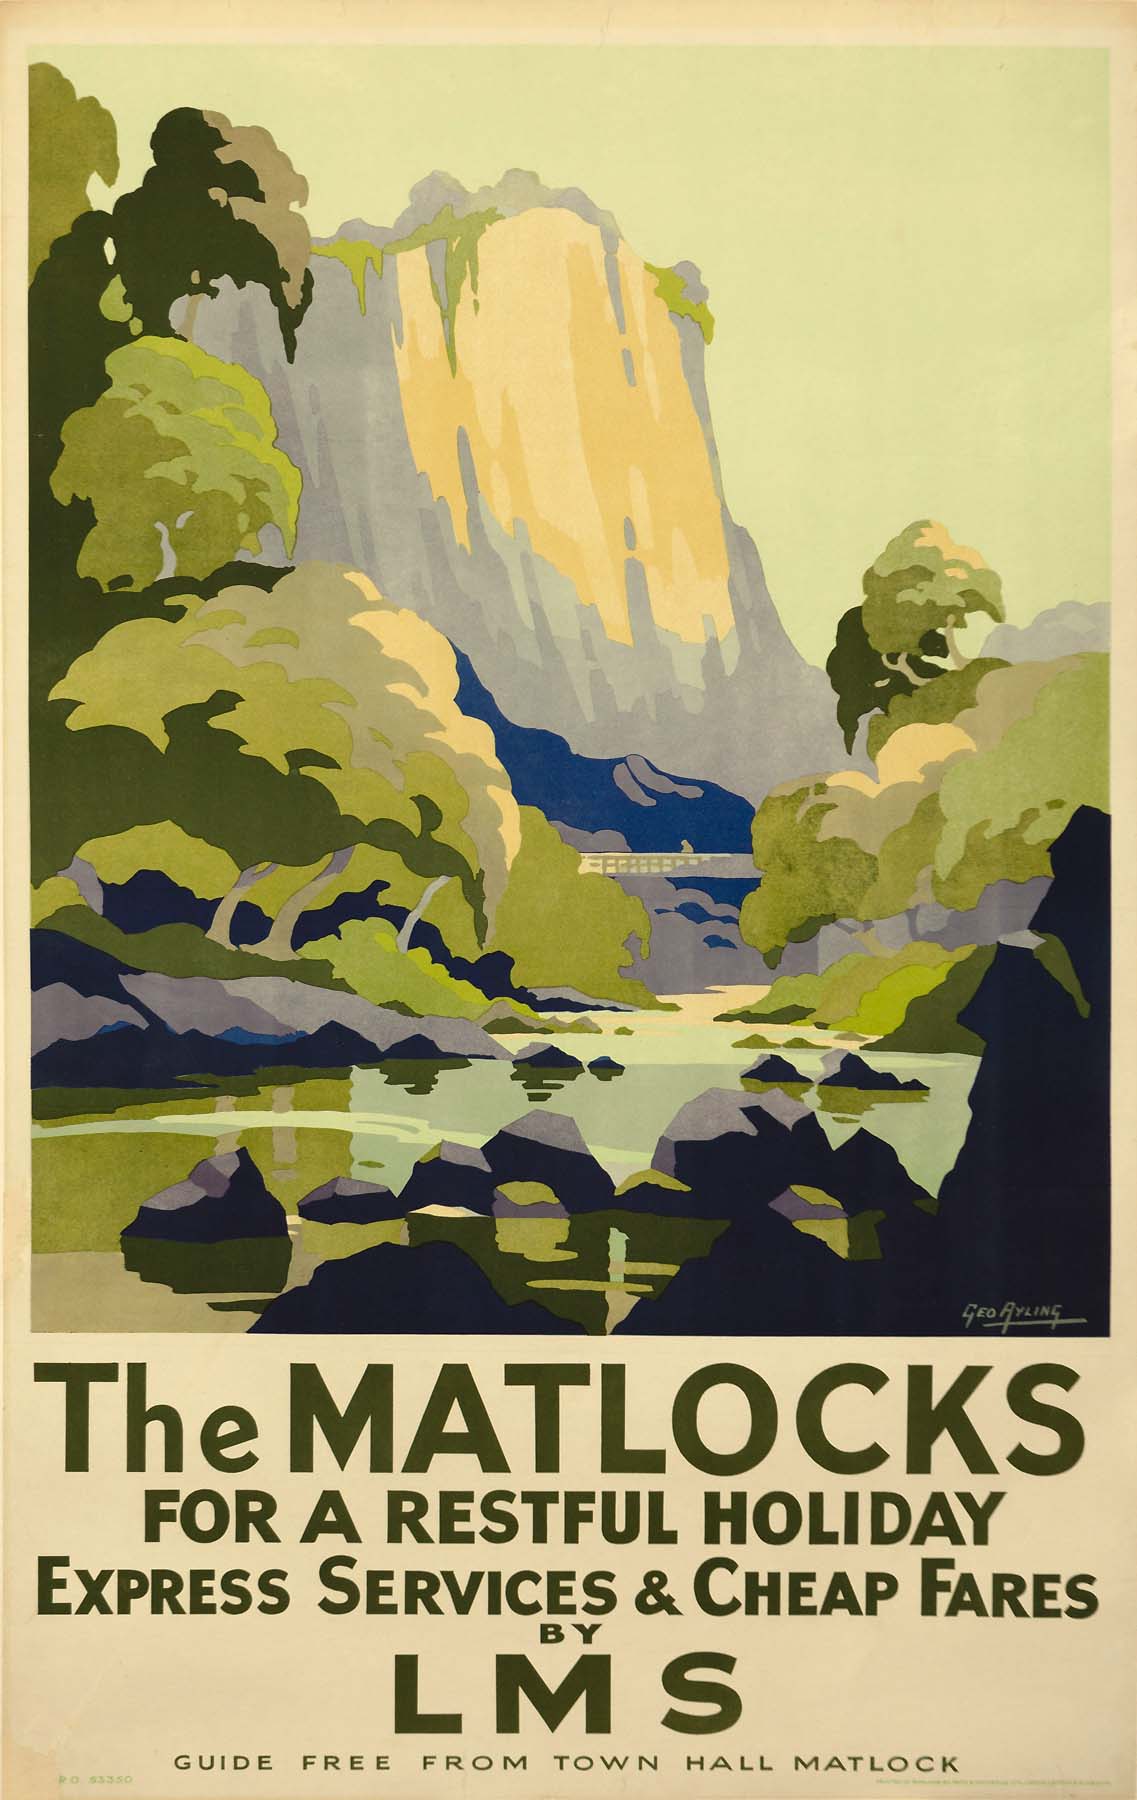 The Matlocks